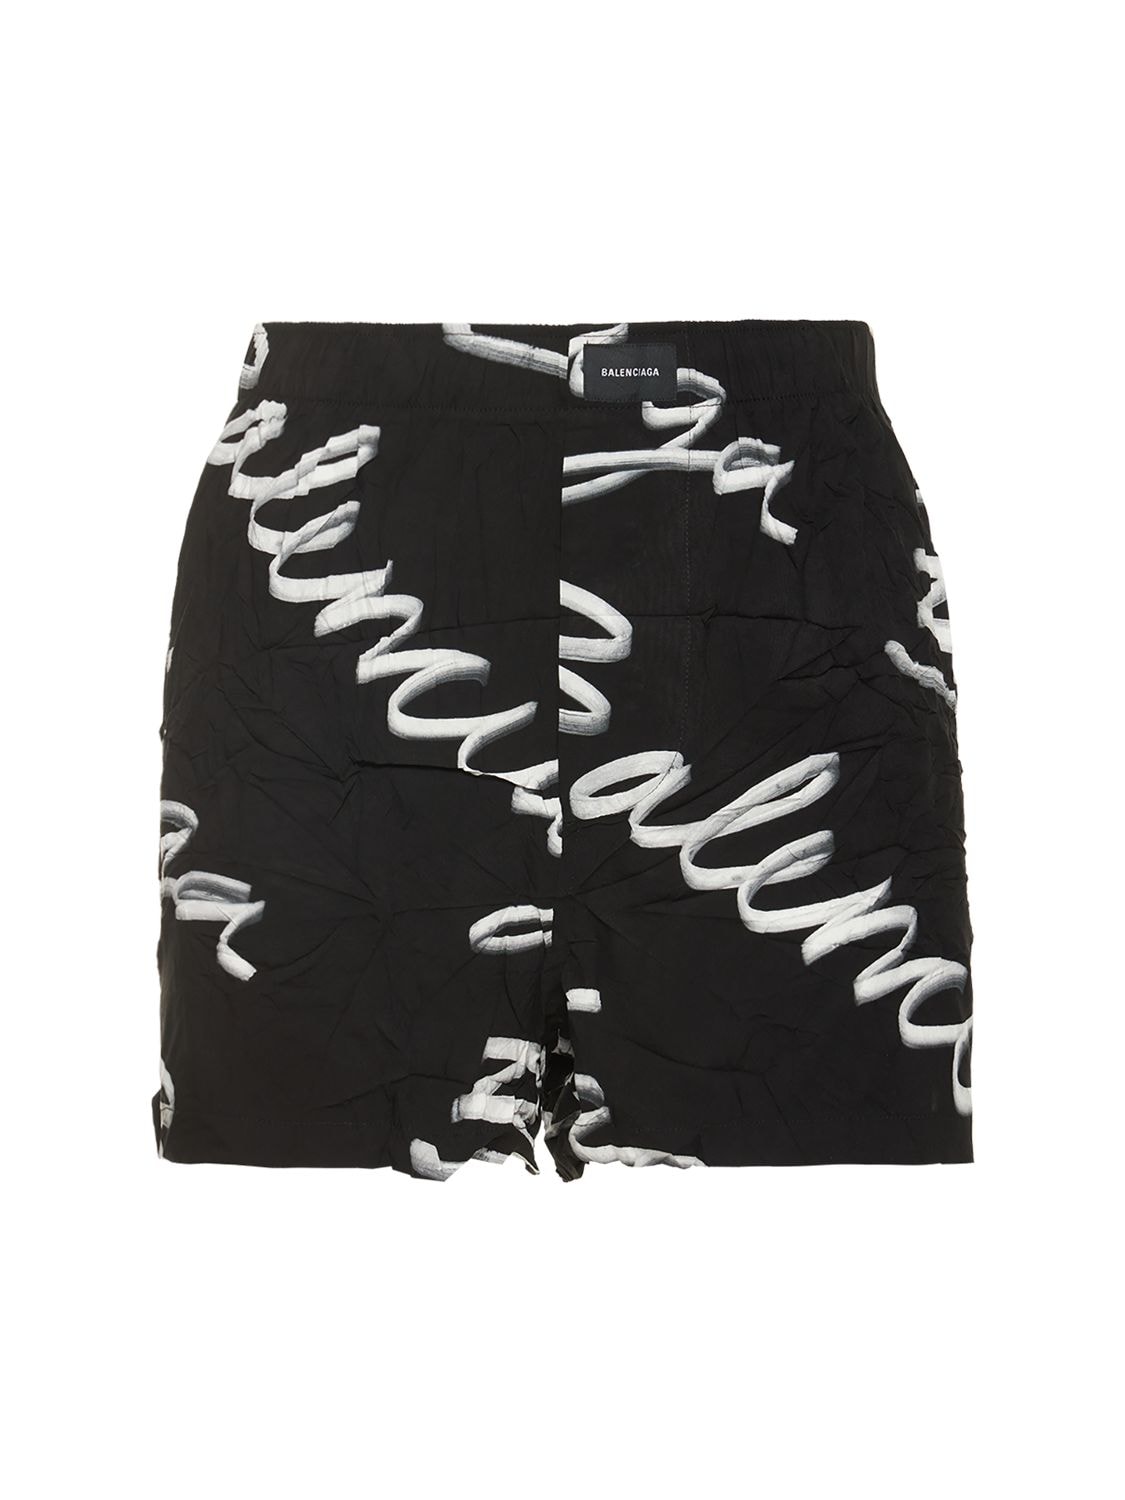 Balenciaga Logo Script Print Boxer Pajama Shorts In Black/white | ModeSens